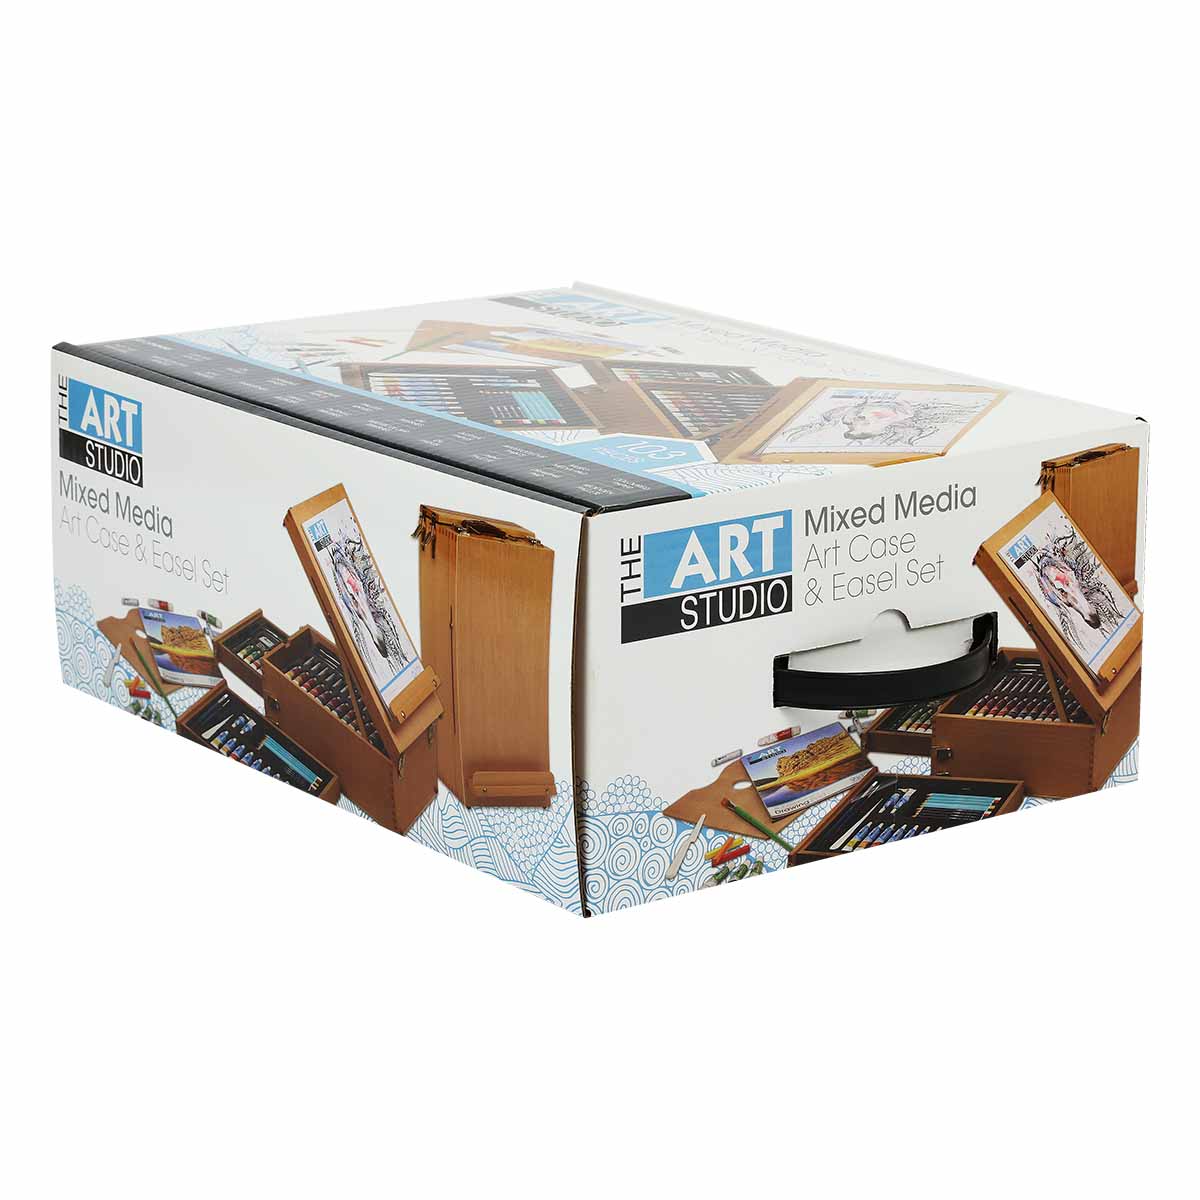 The Art Studio Complete Mixed Media Art Set (180 Pieces) 943 : Buy Now